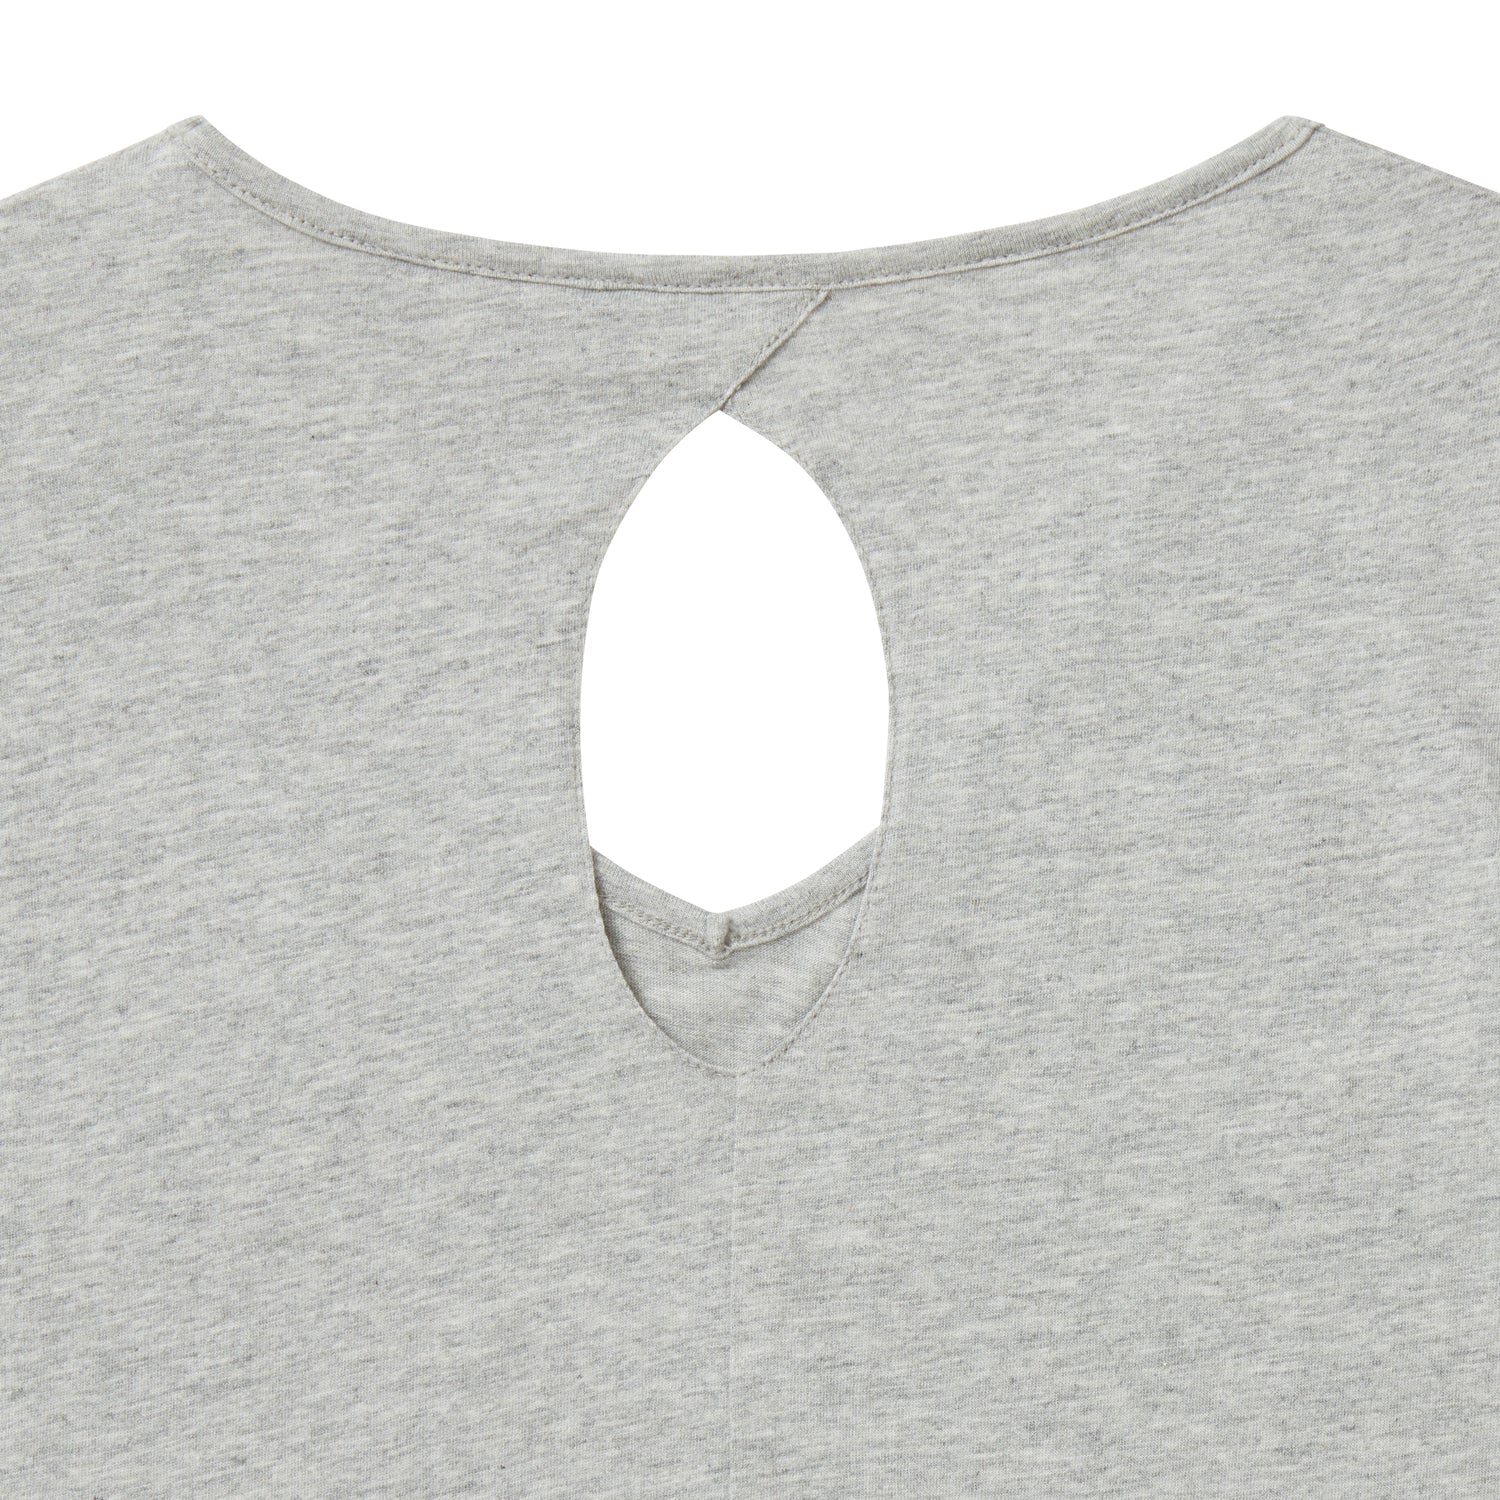 Women's Open Back T-Shirt, Gray